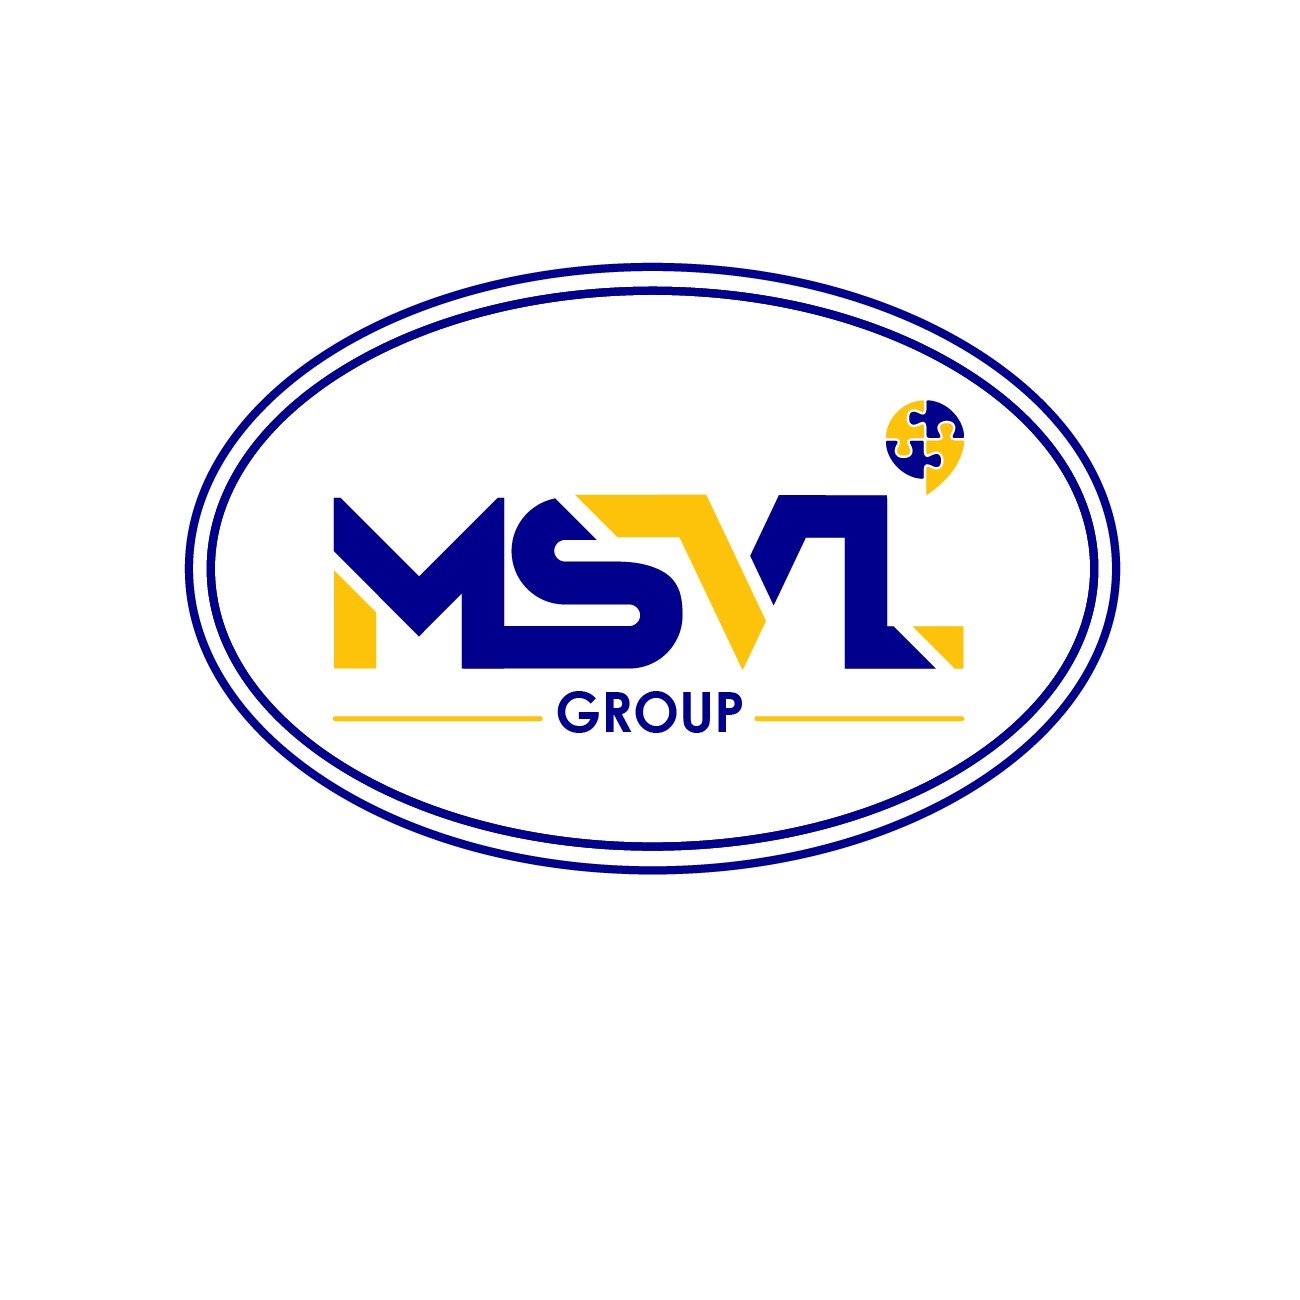 MSVL Group